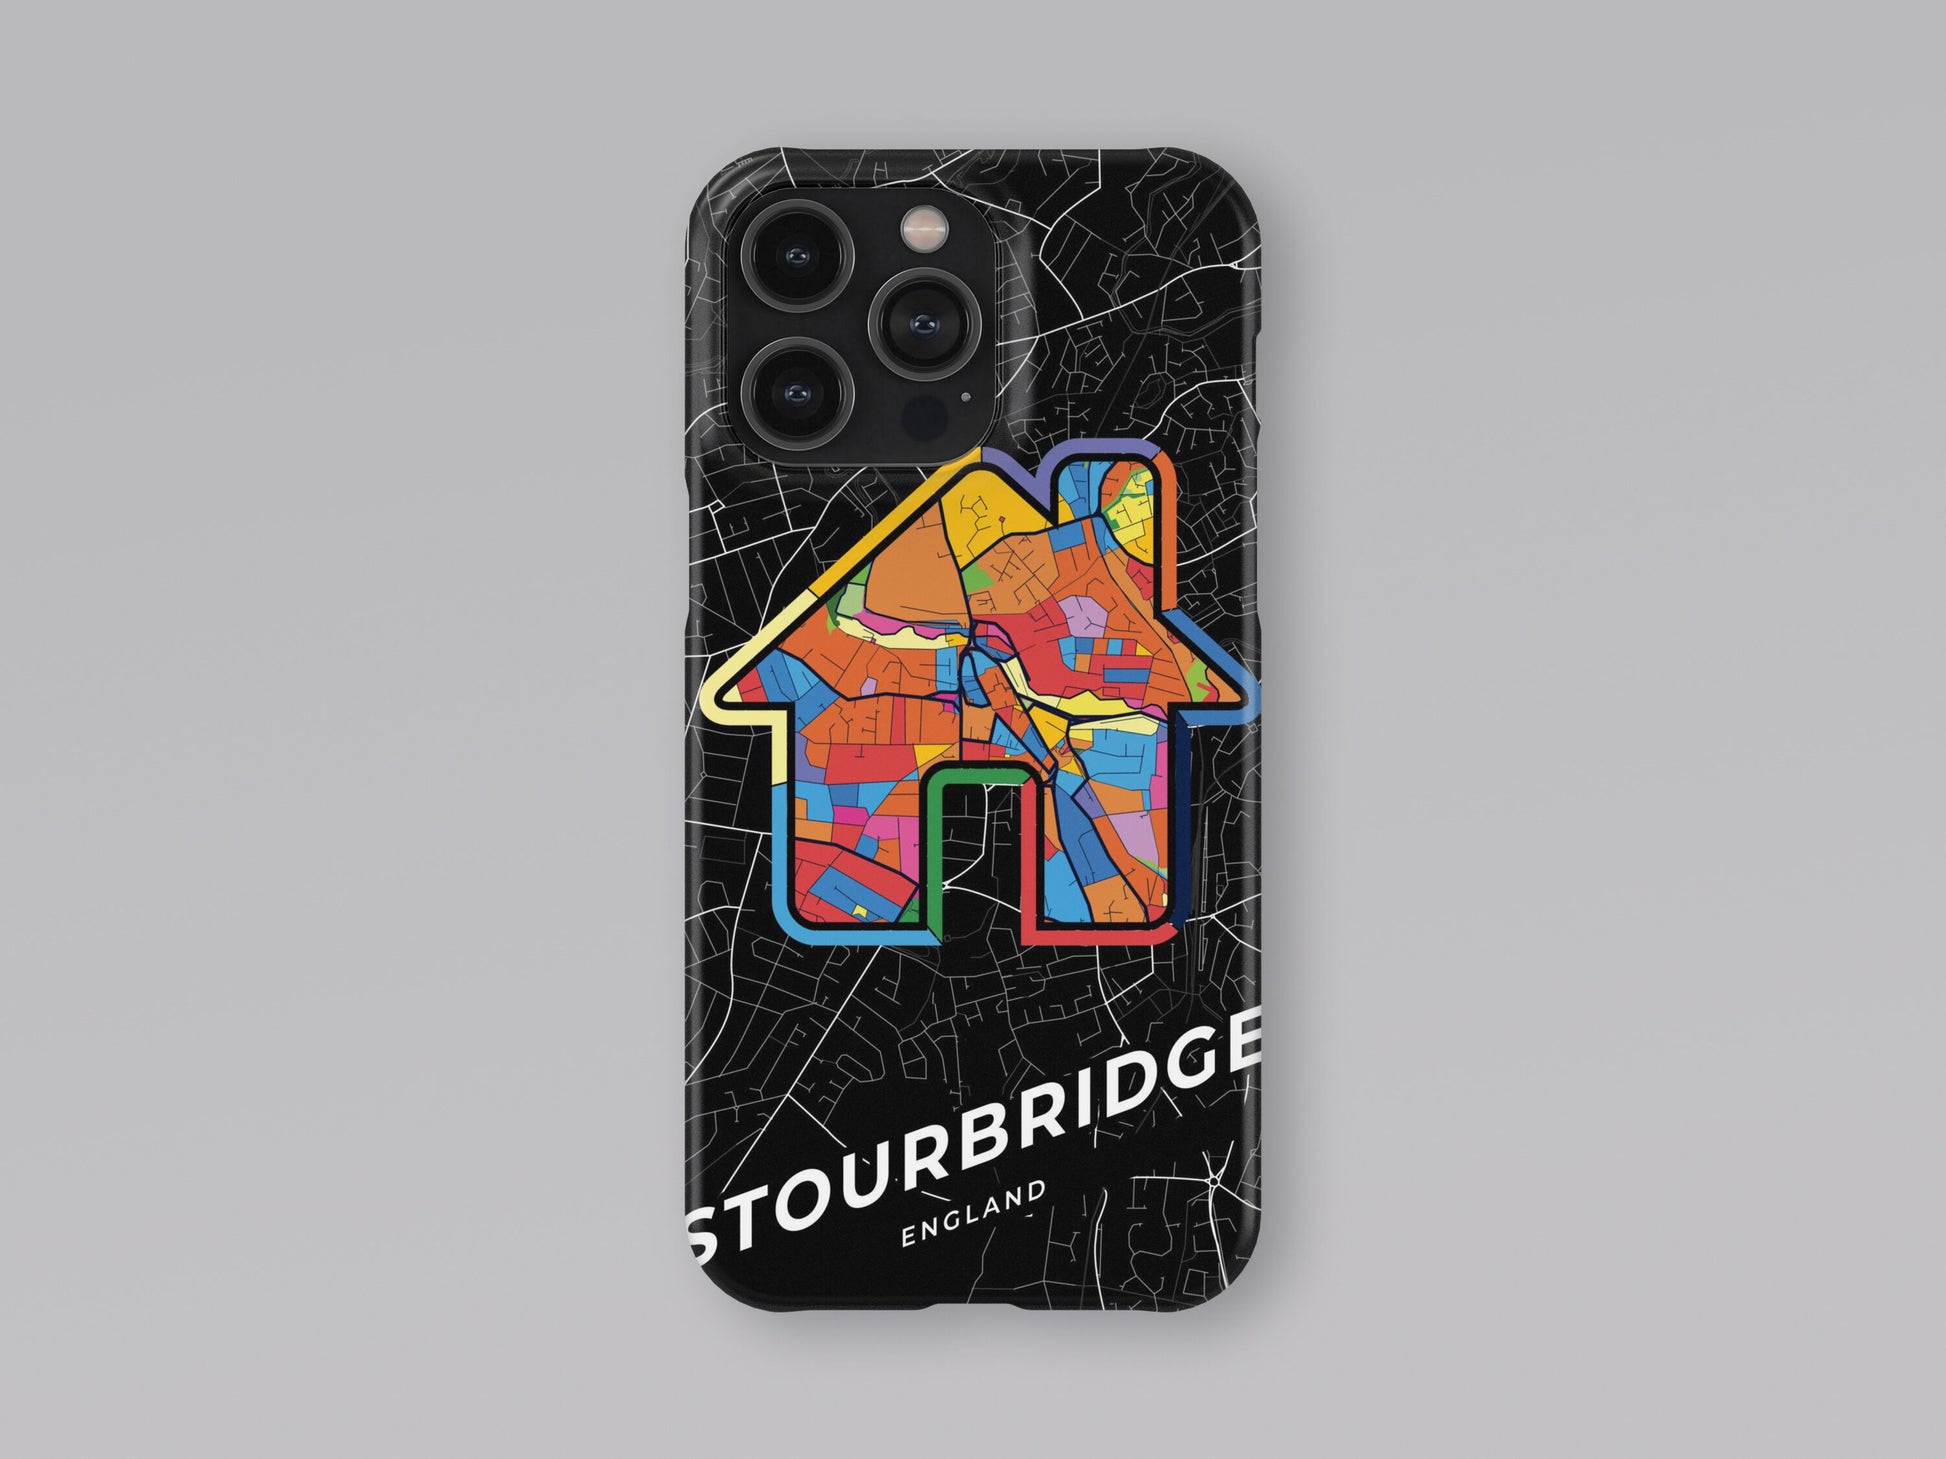 Stourbridge England slim phone case with colorful icon 3